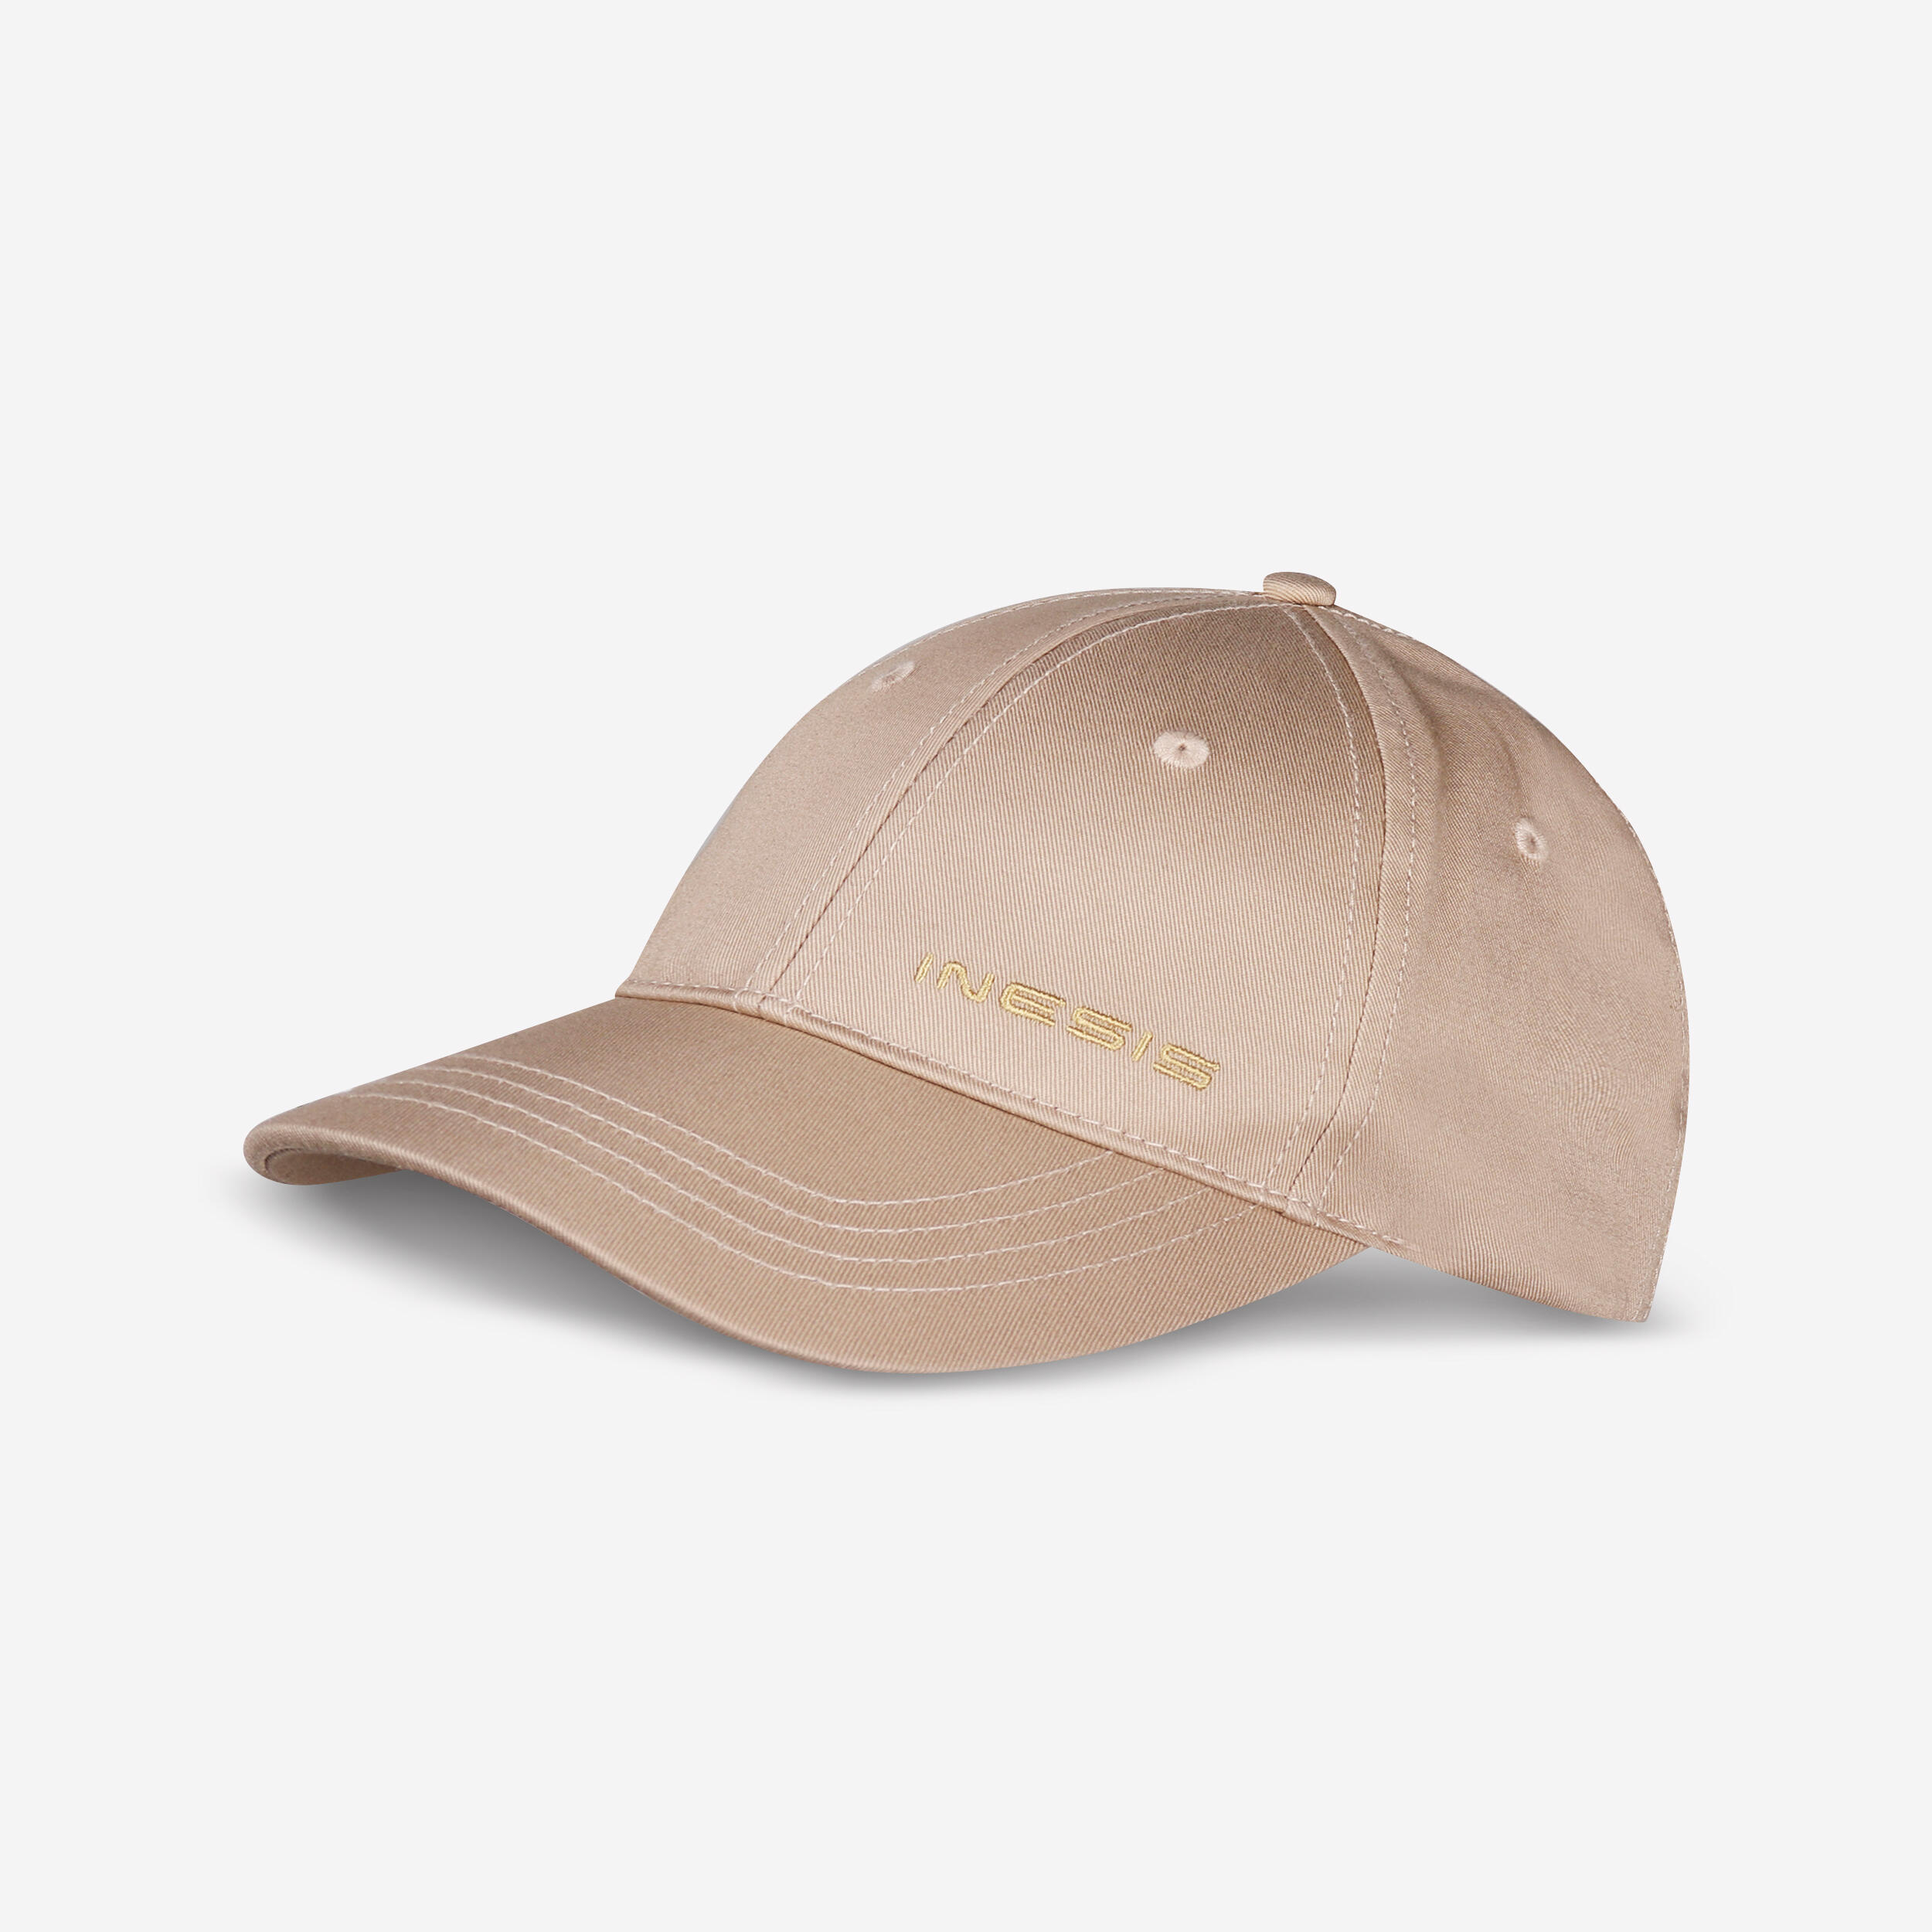 Adult's golf cap - MW 500 beige 1/4